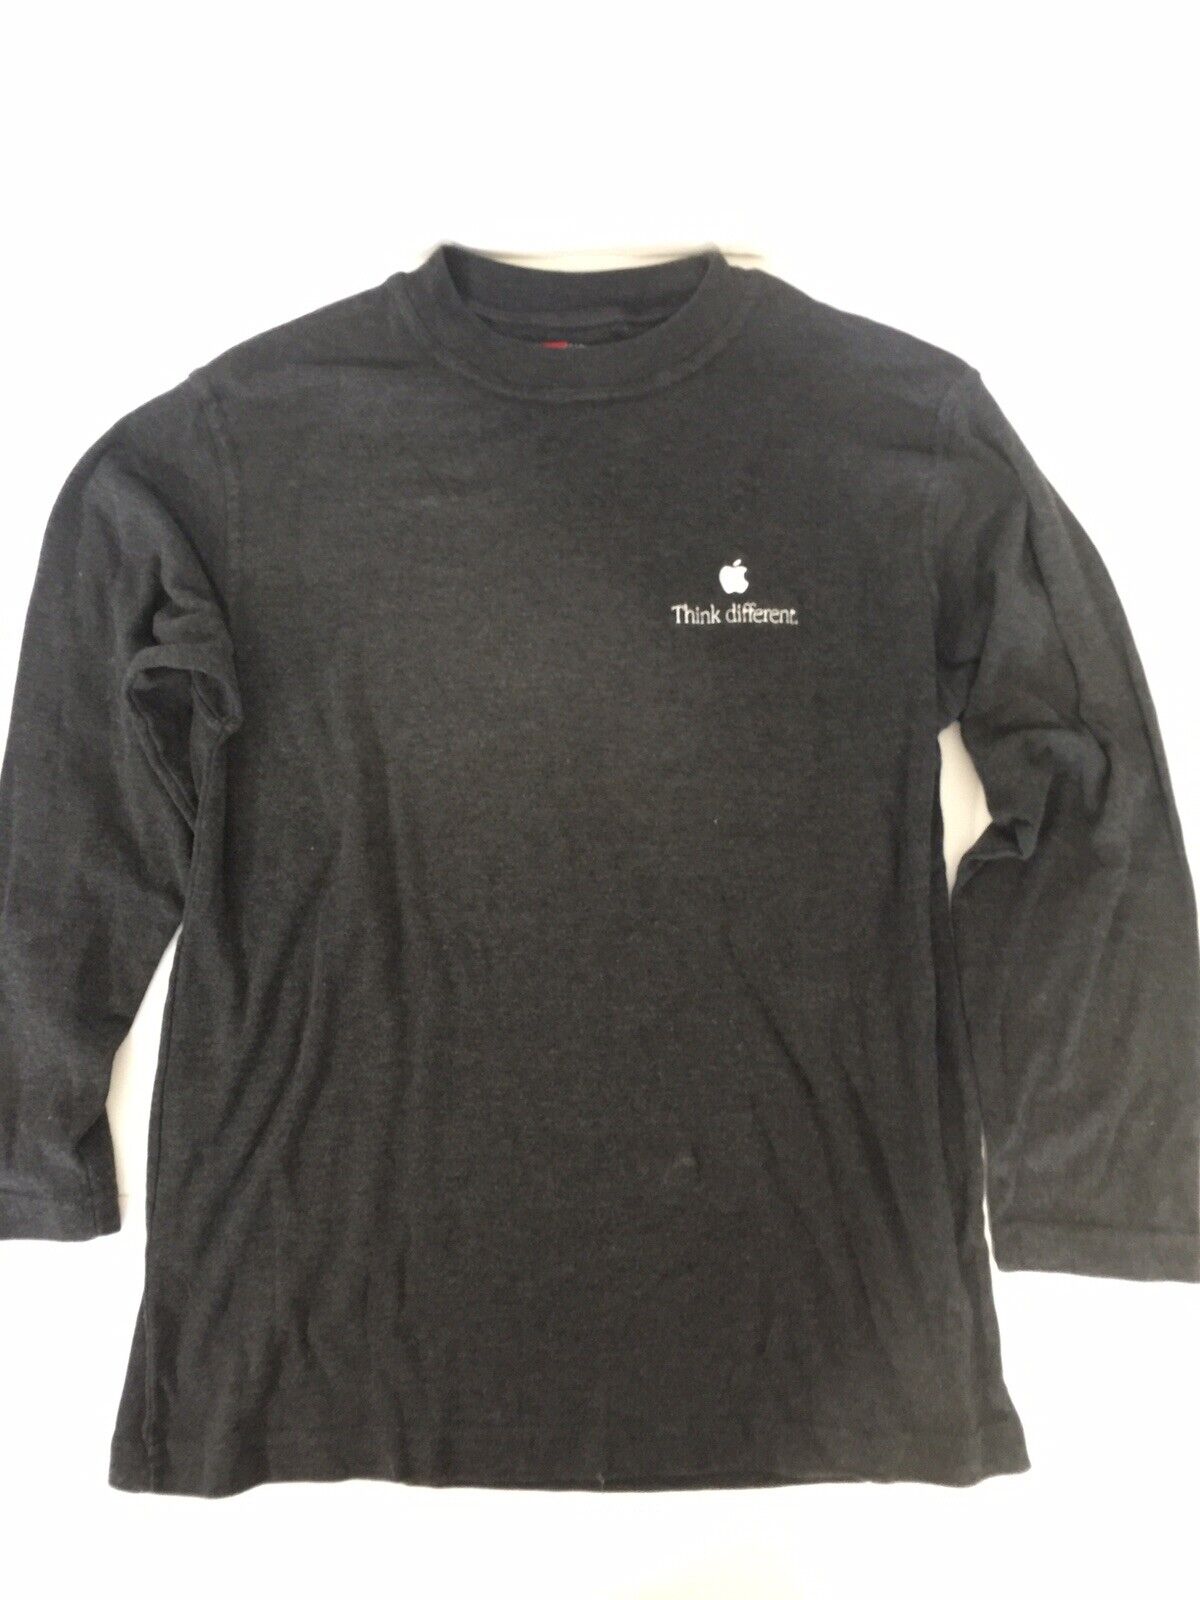 Vintage Apple Computer Employee Think Different Mock Long Sleeve Shirt Medium